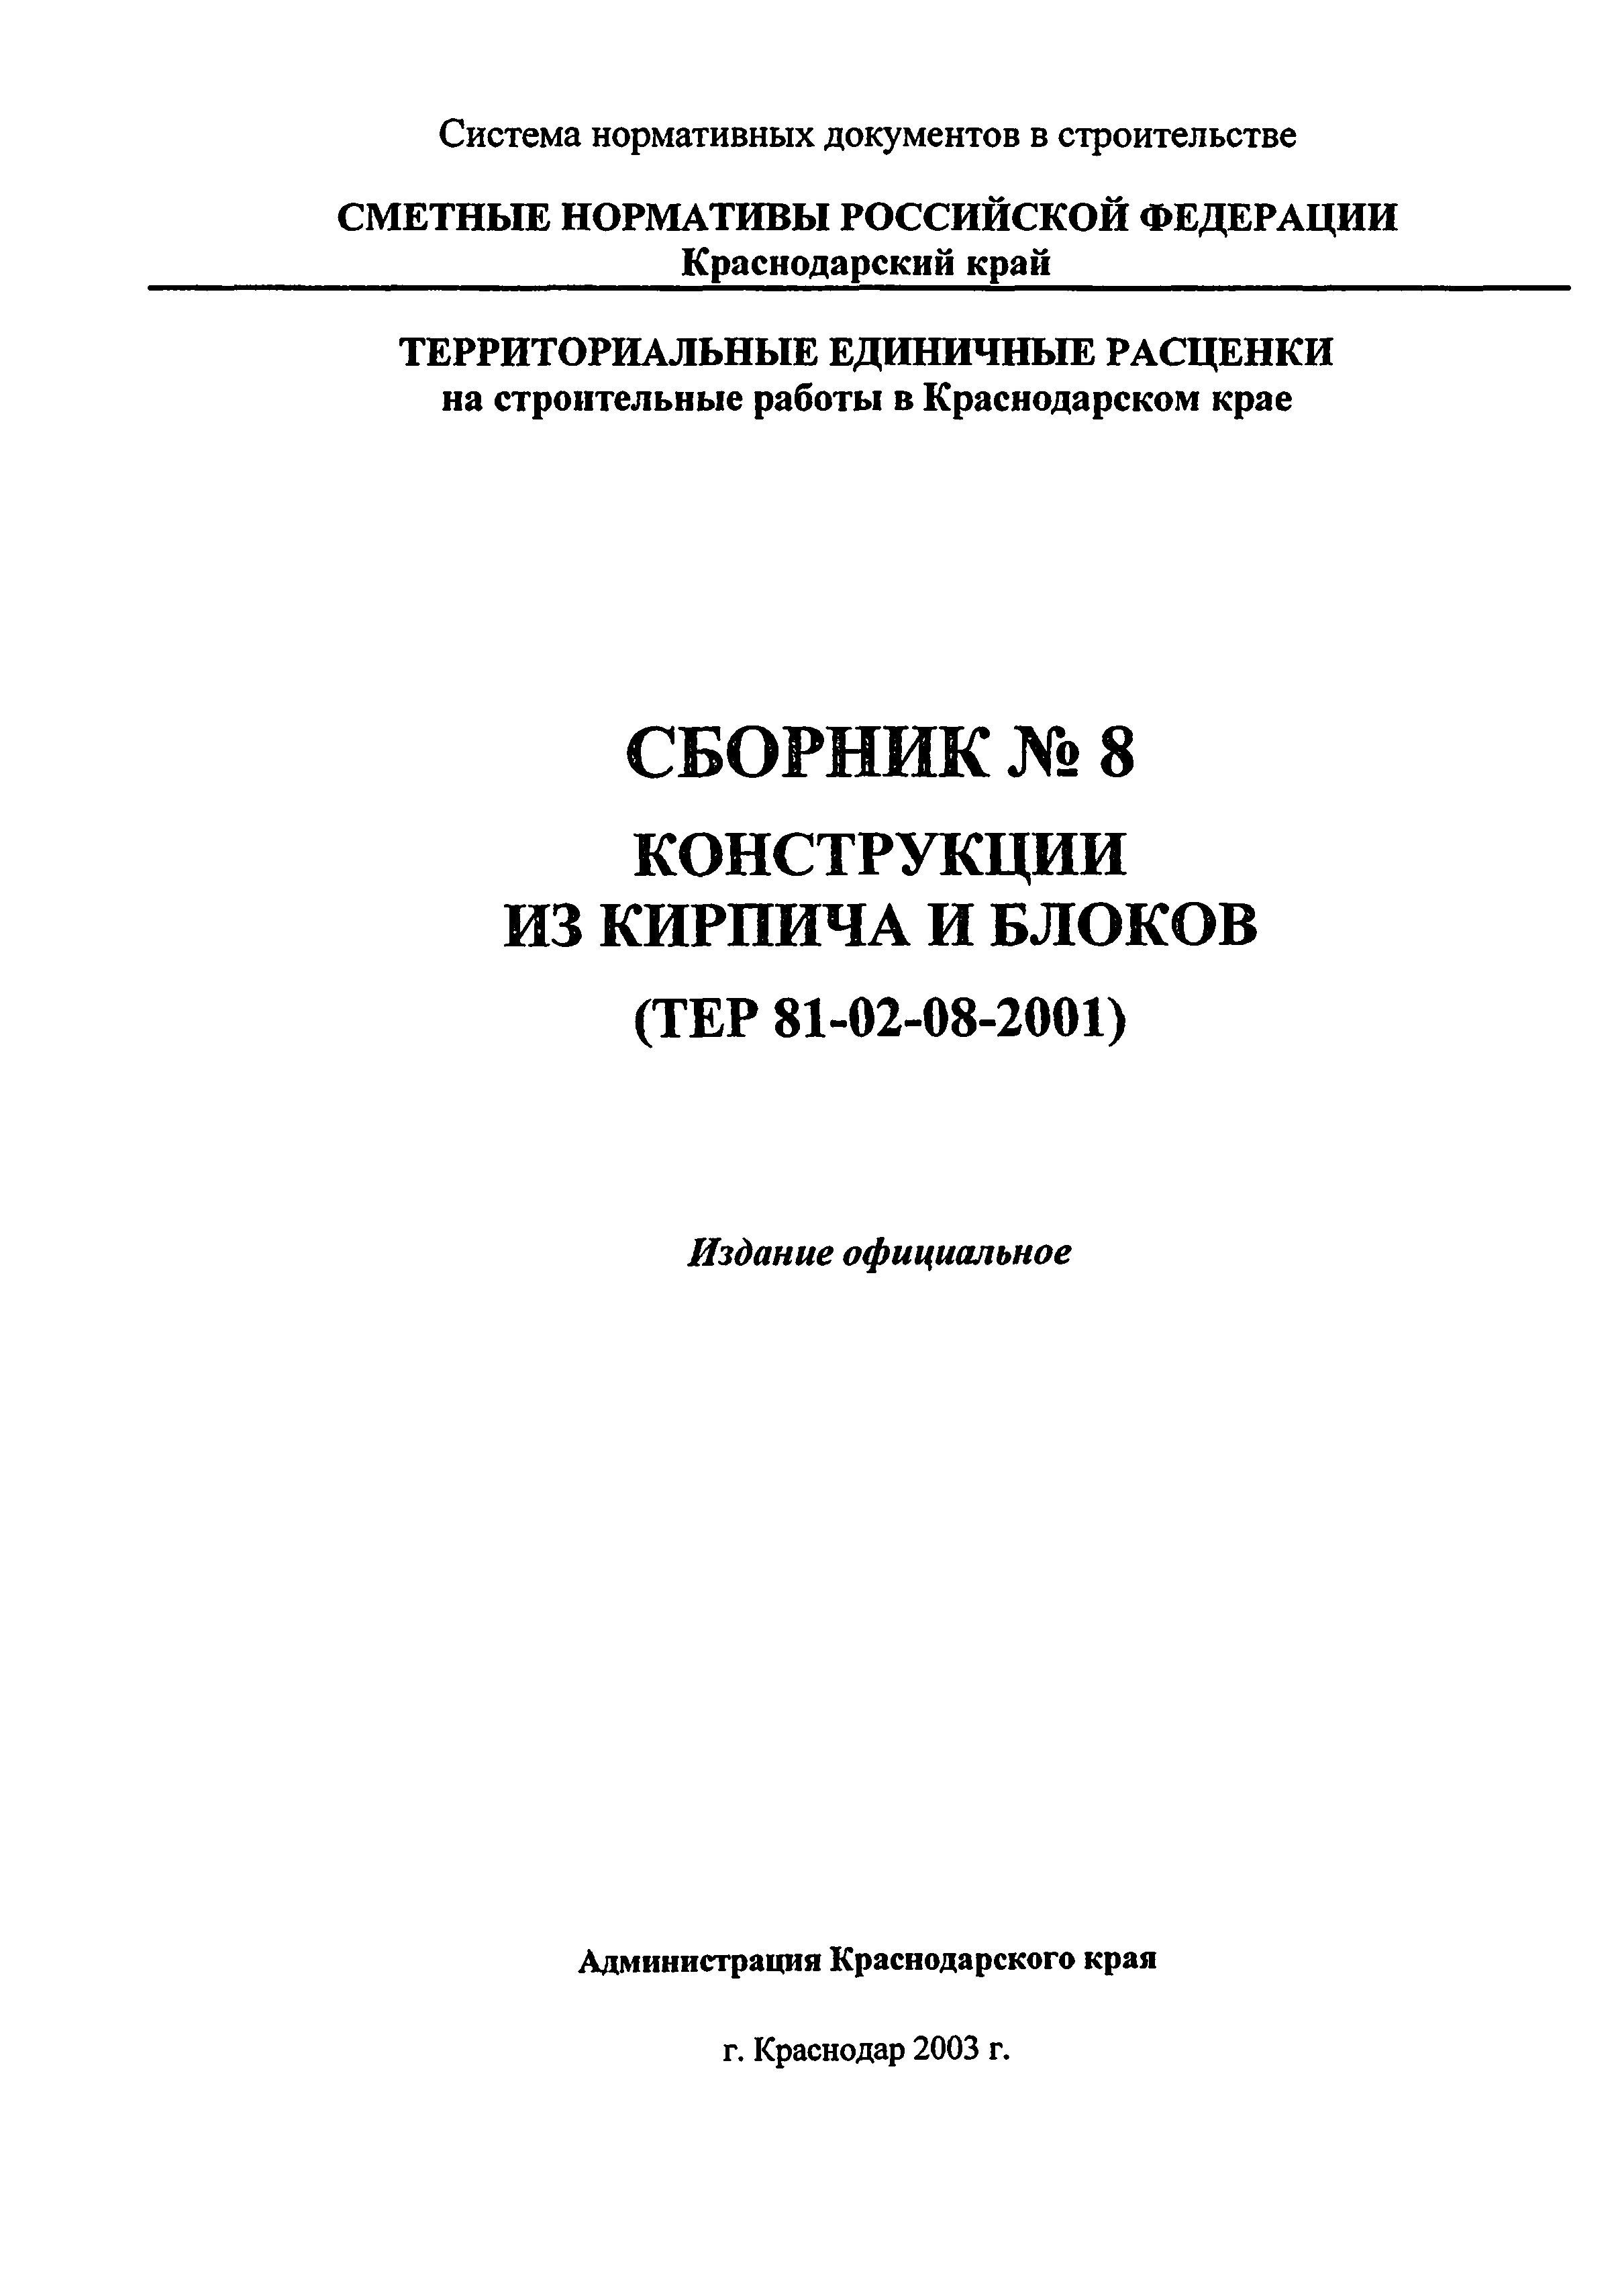 ТЕР Краснодарского края 2001-08